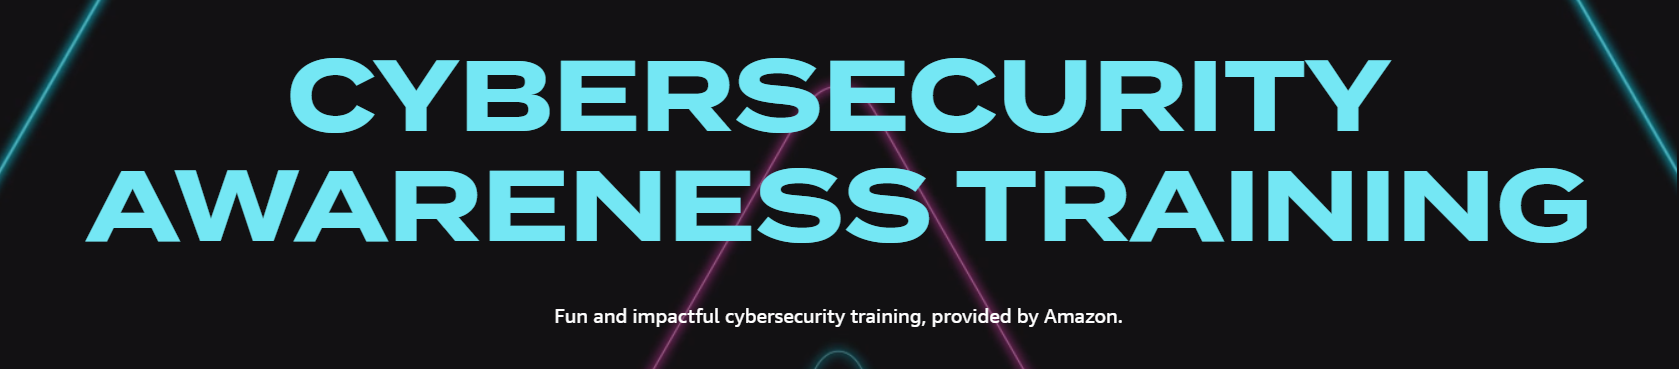 Cybersecurity Awareness Training by Amazon